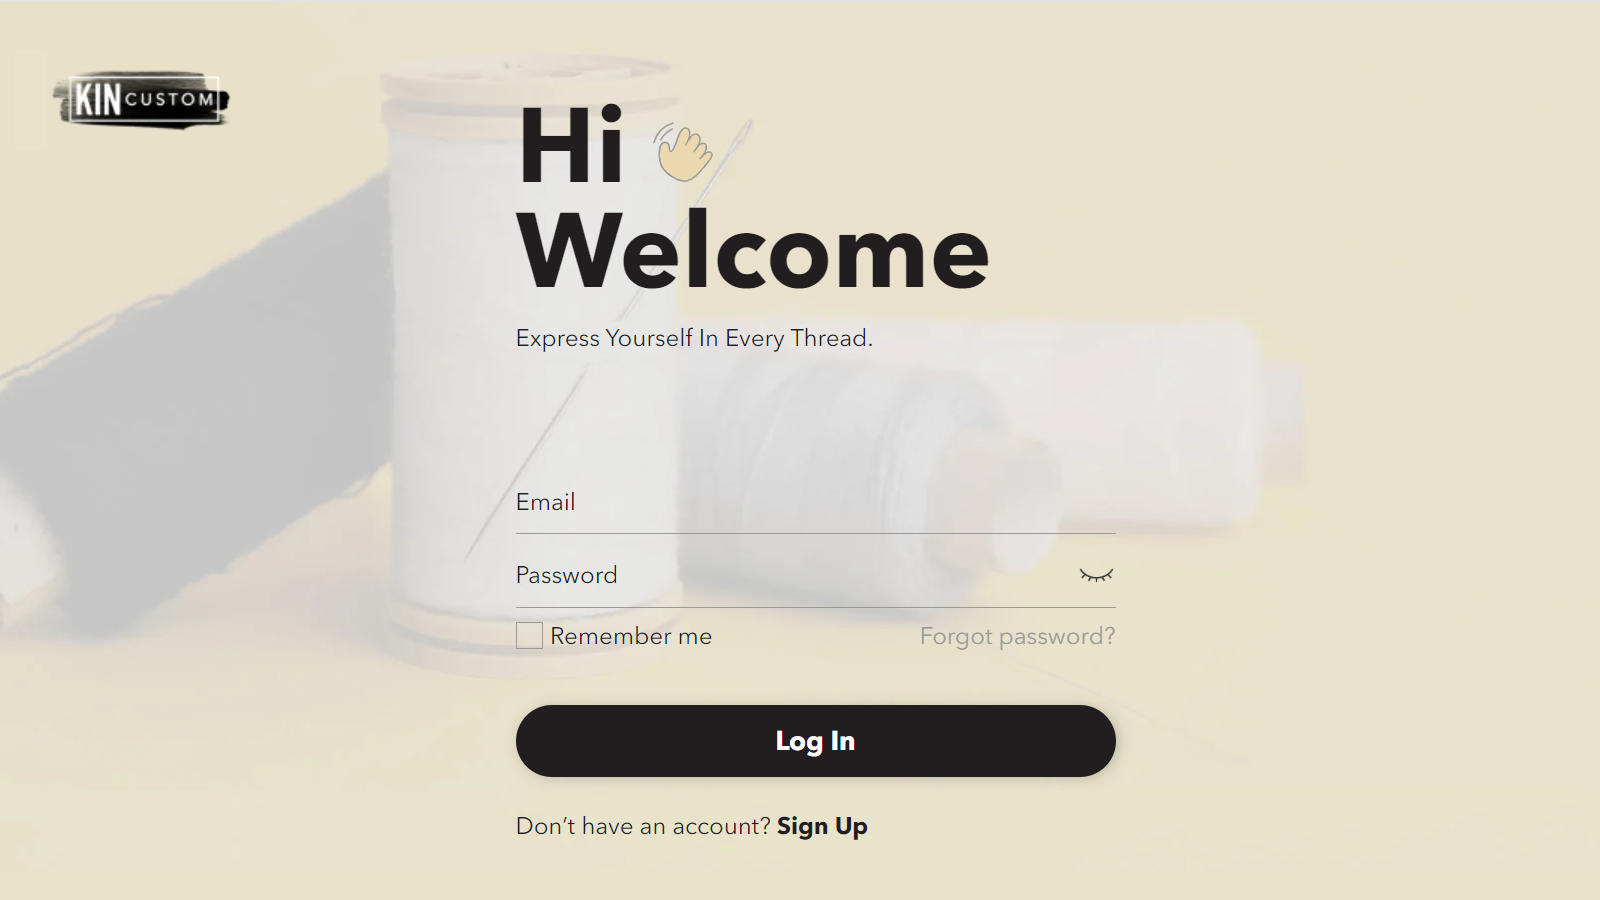 Create an account & login to start designing.